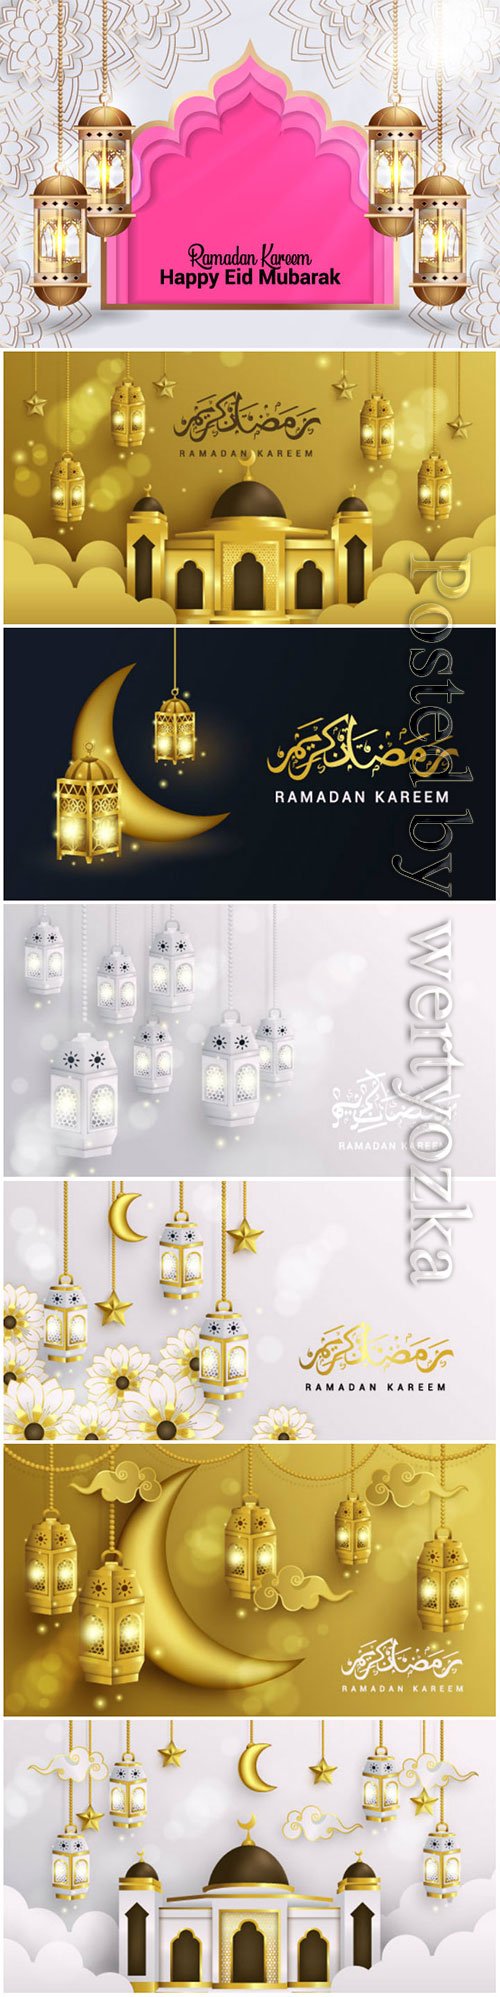 Ramadan Kareem and happy Eid Mubarak background vector